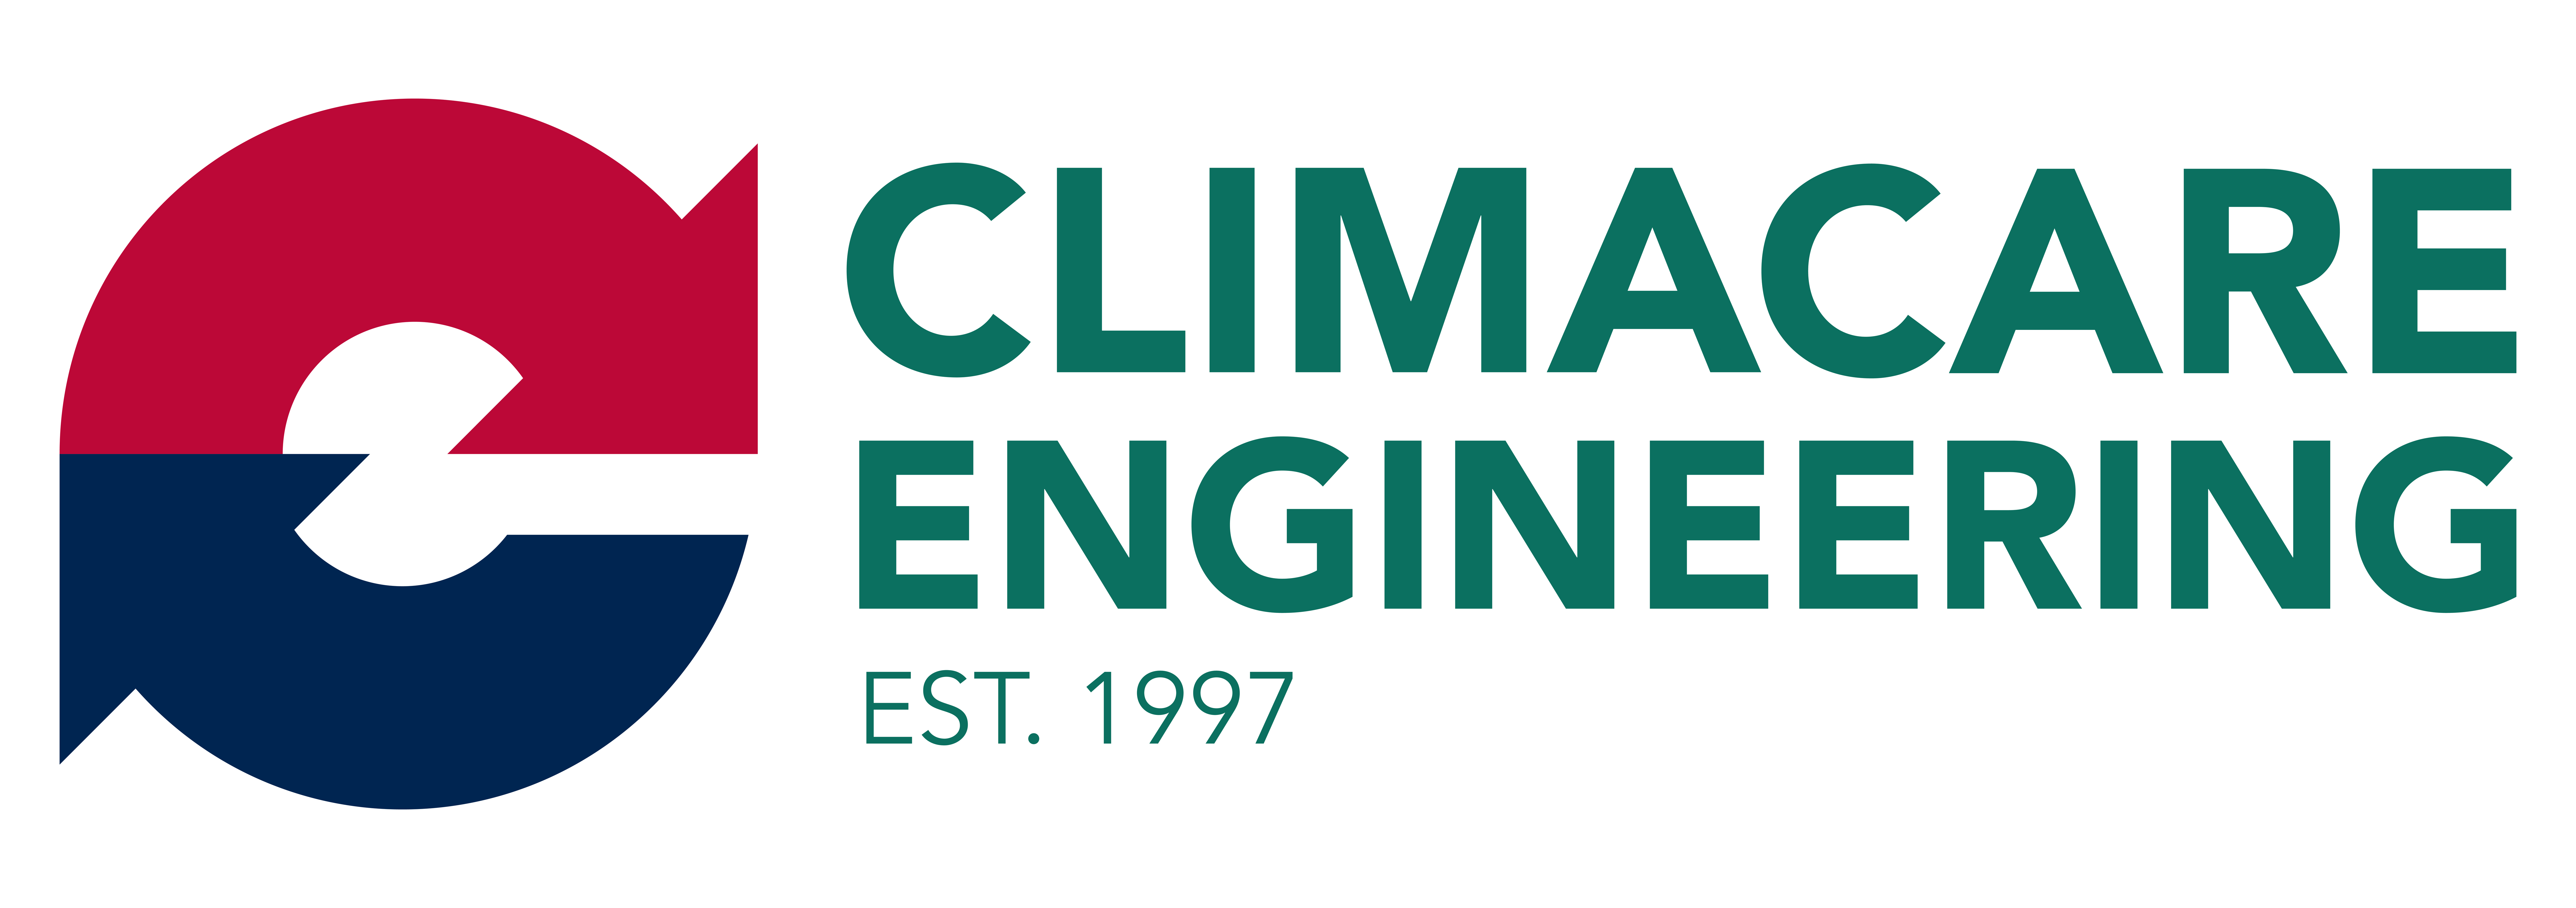 Climacare Engineering Ltd